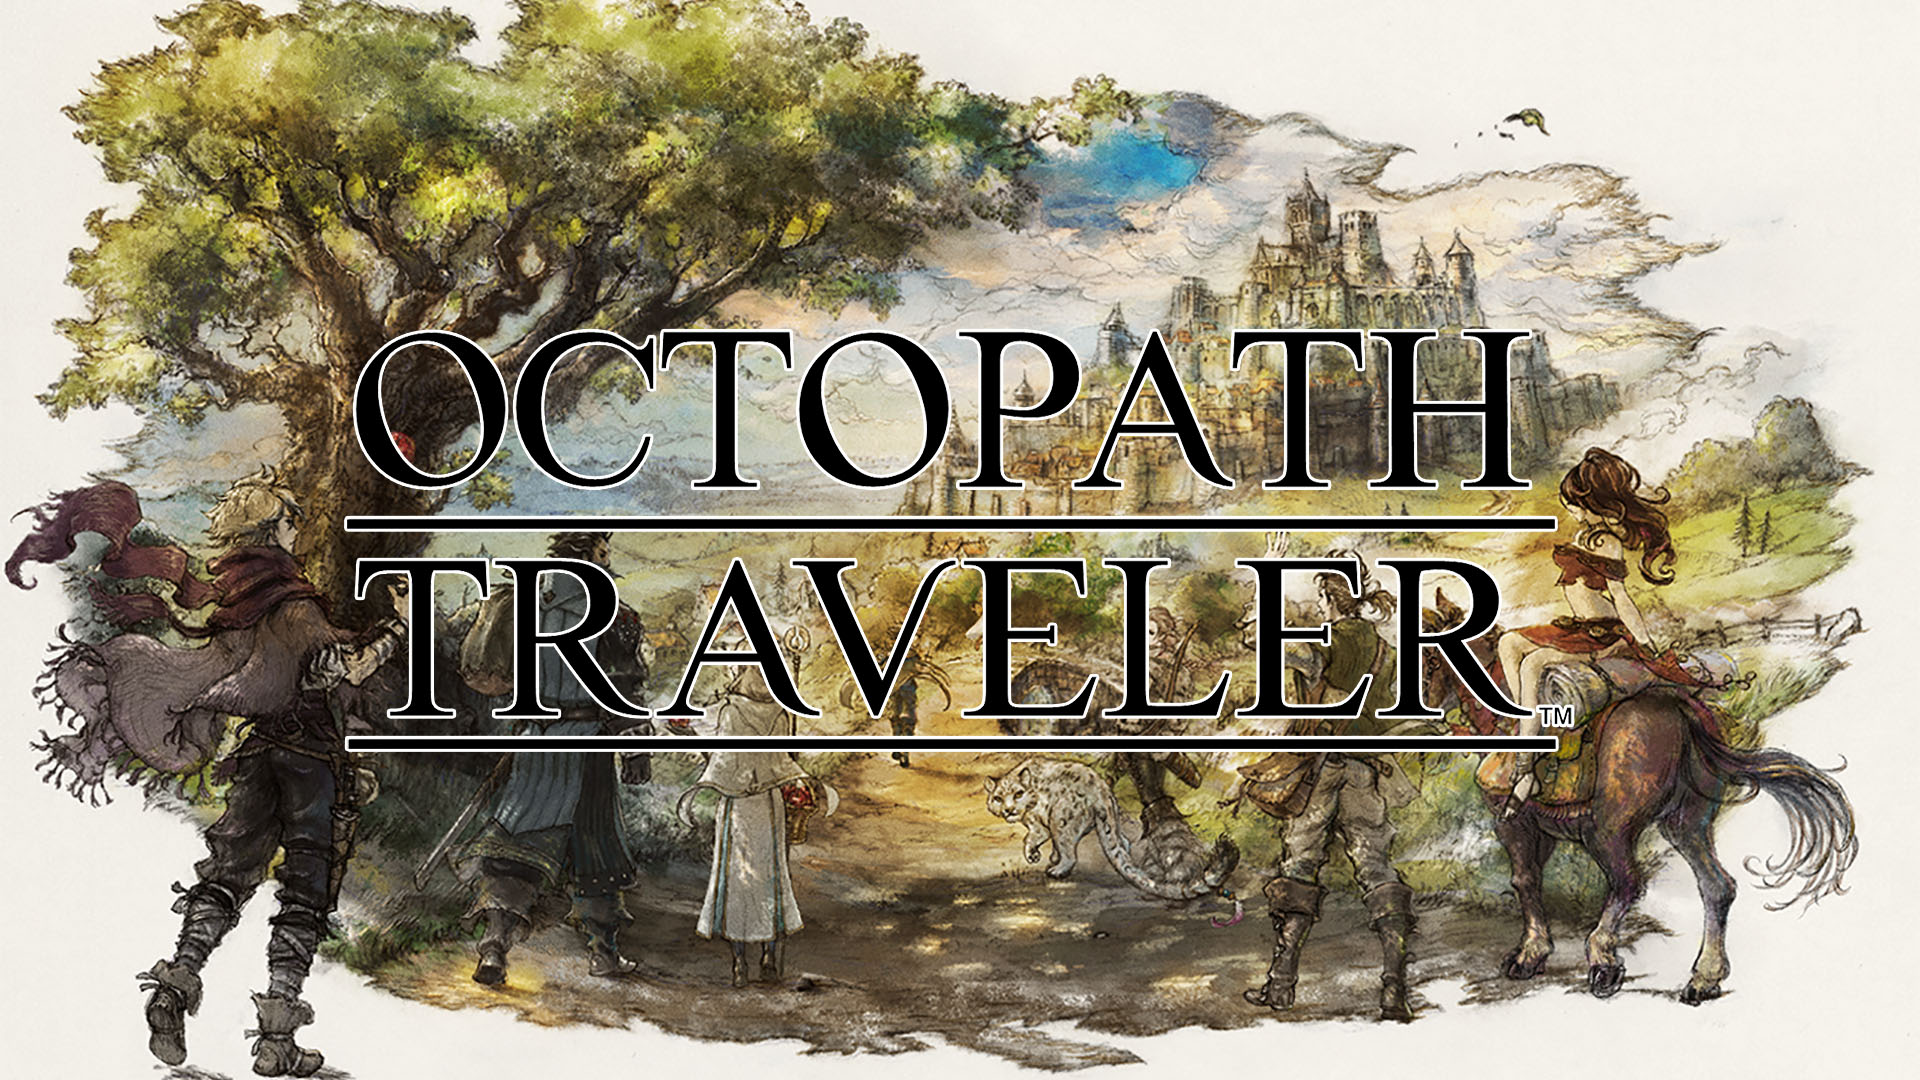 Octopath traveler